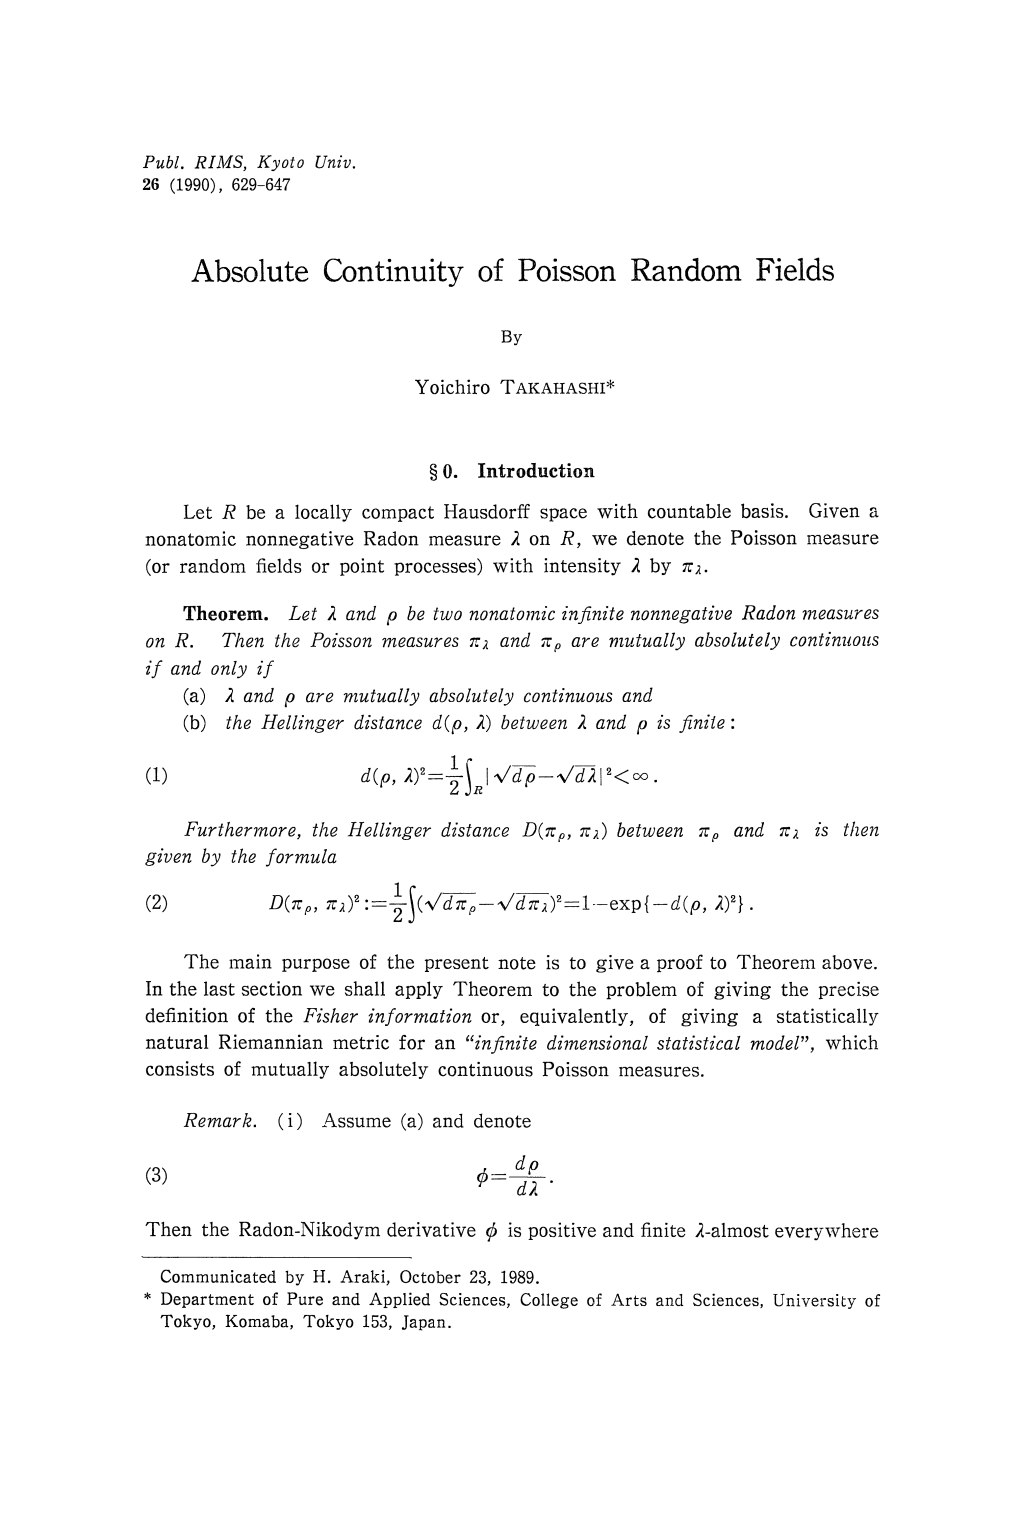 Absolute Continuity of Poisson Random Fields